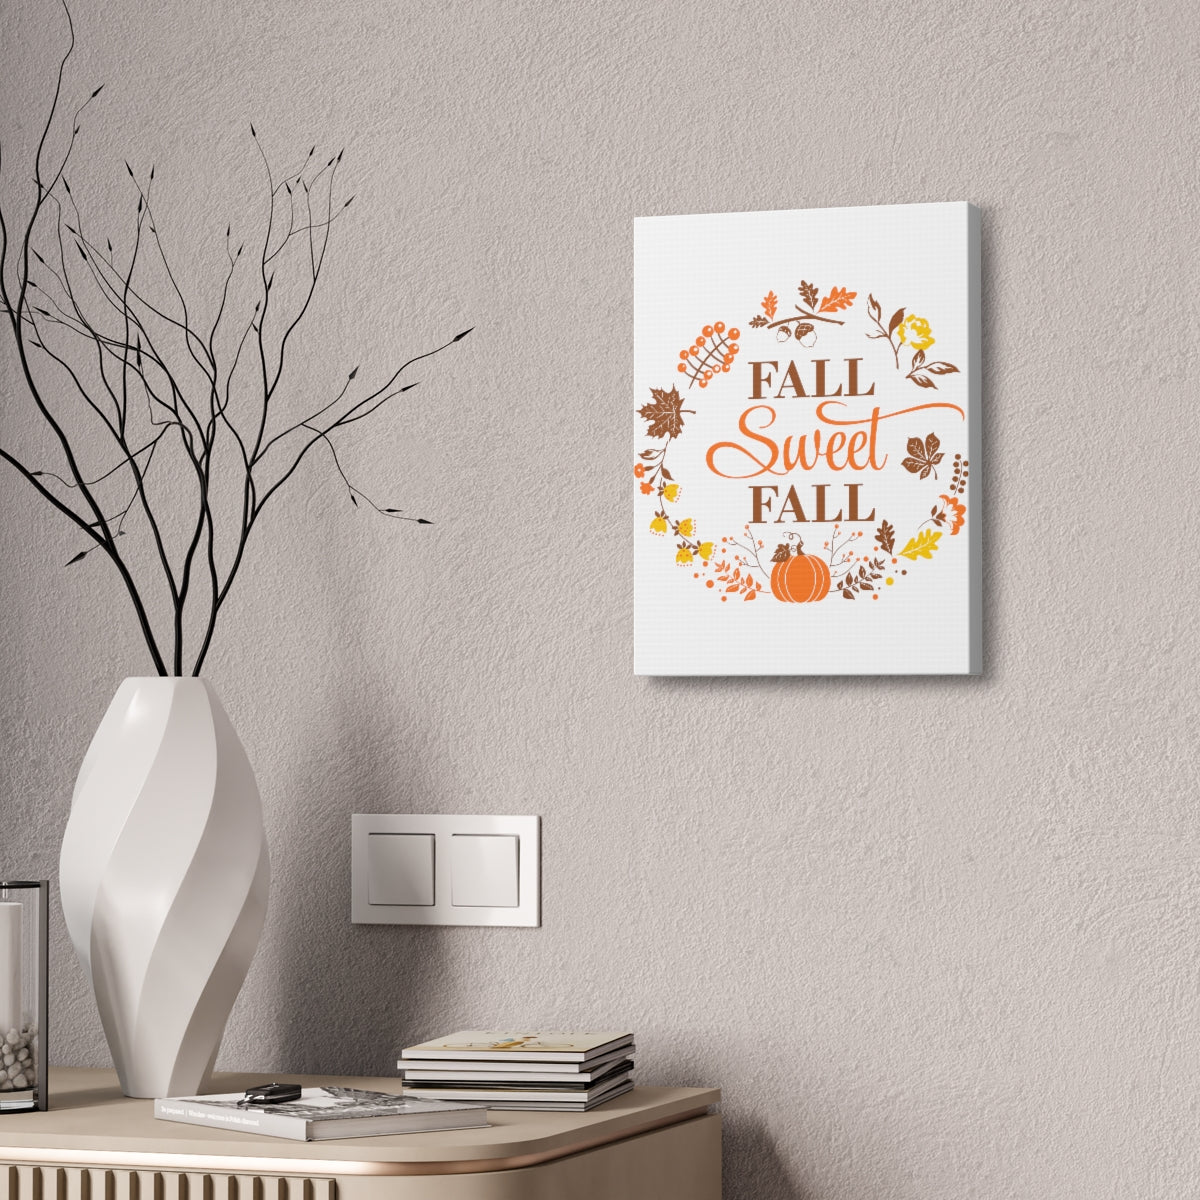 Farmhouse Wall Art - Canvas Sign - Fall Sweet Fall